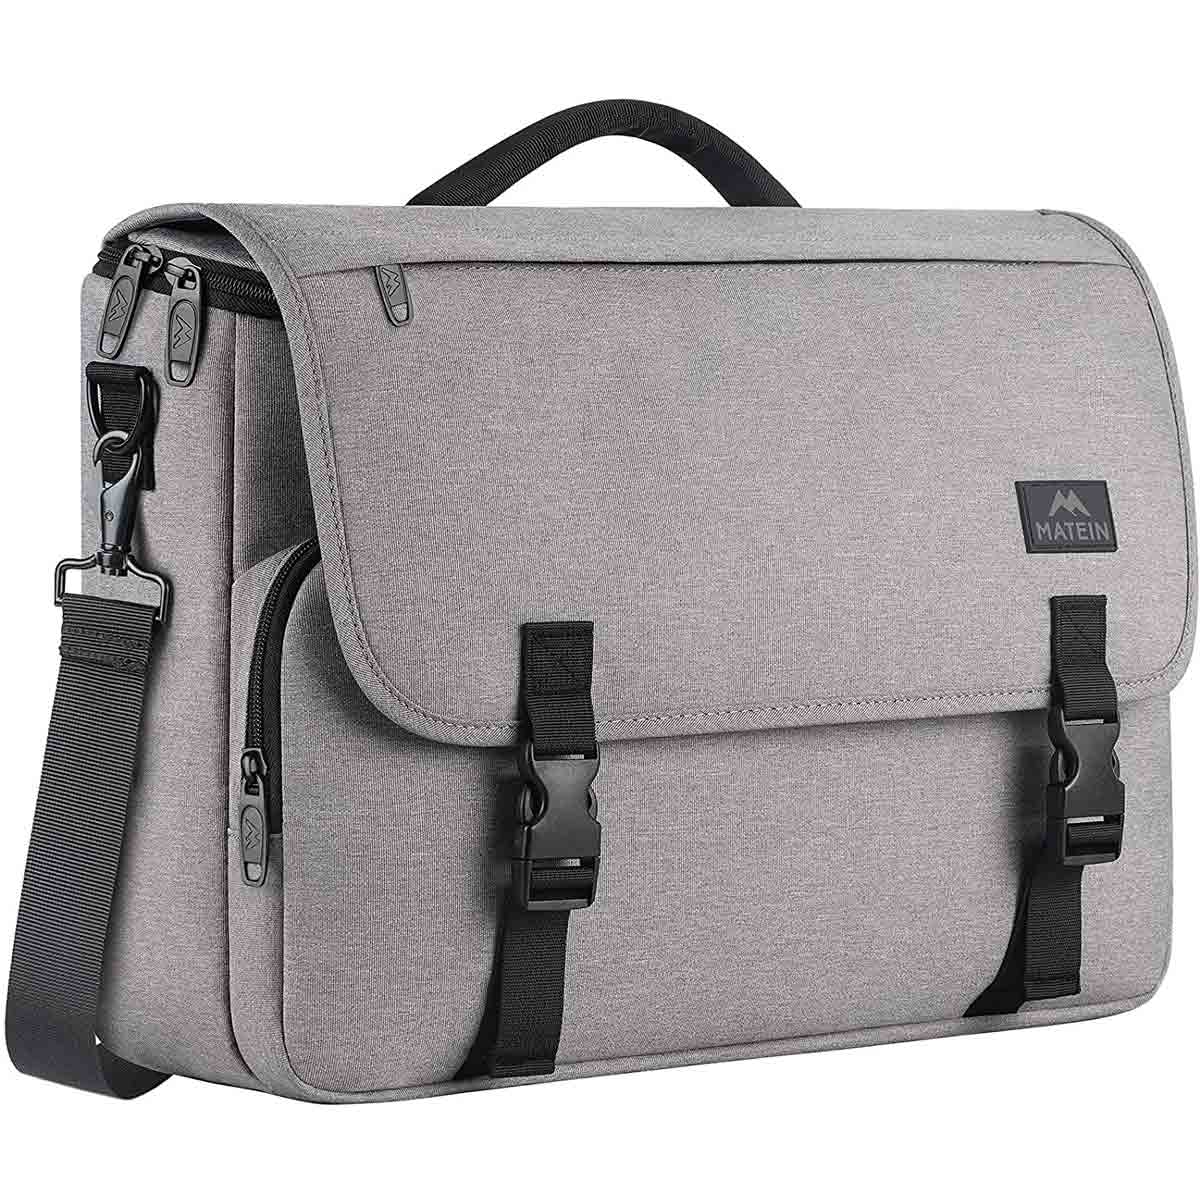 Timbuk2 Proof Messenger Review: The Ultimate Laptop Messenger Bag